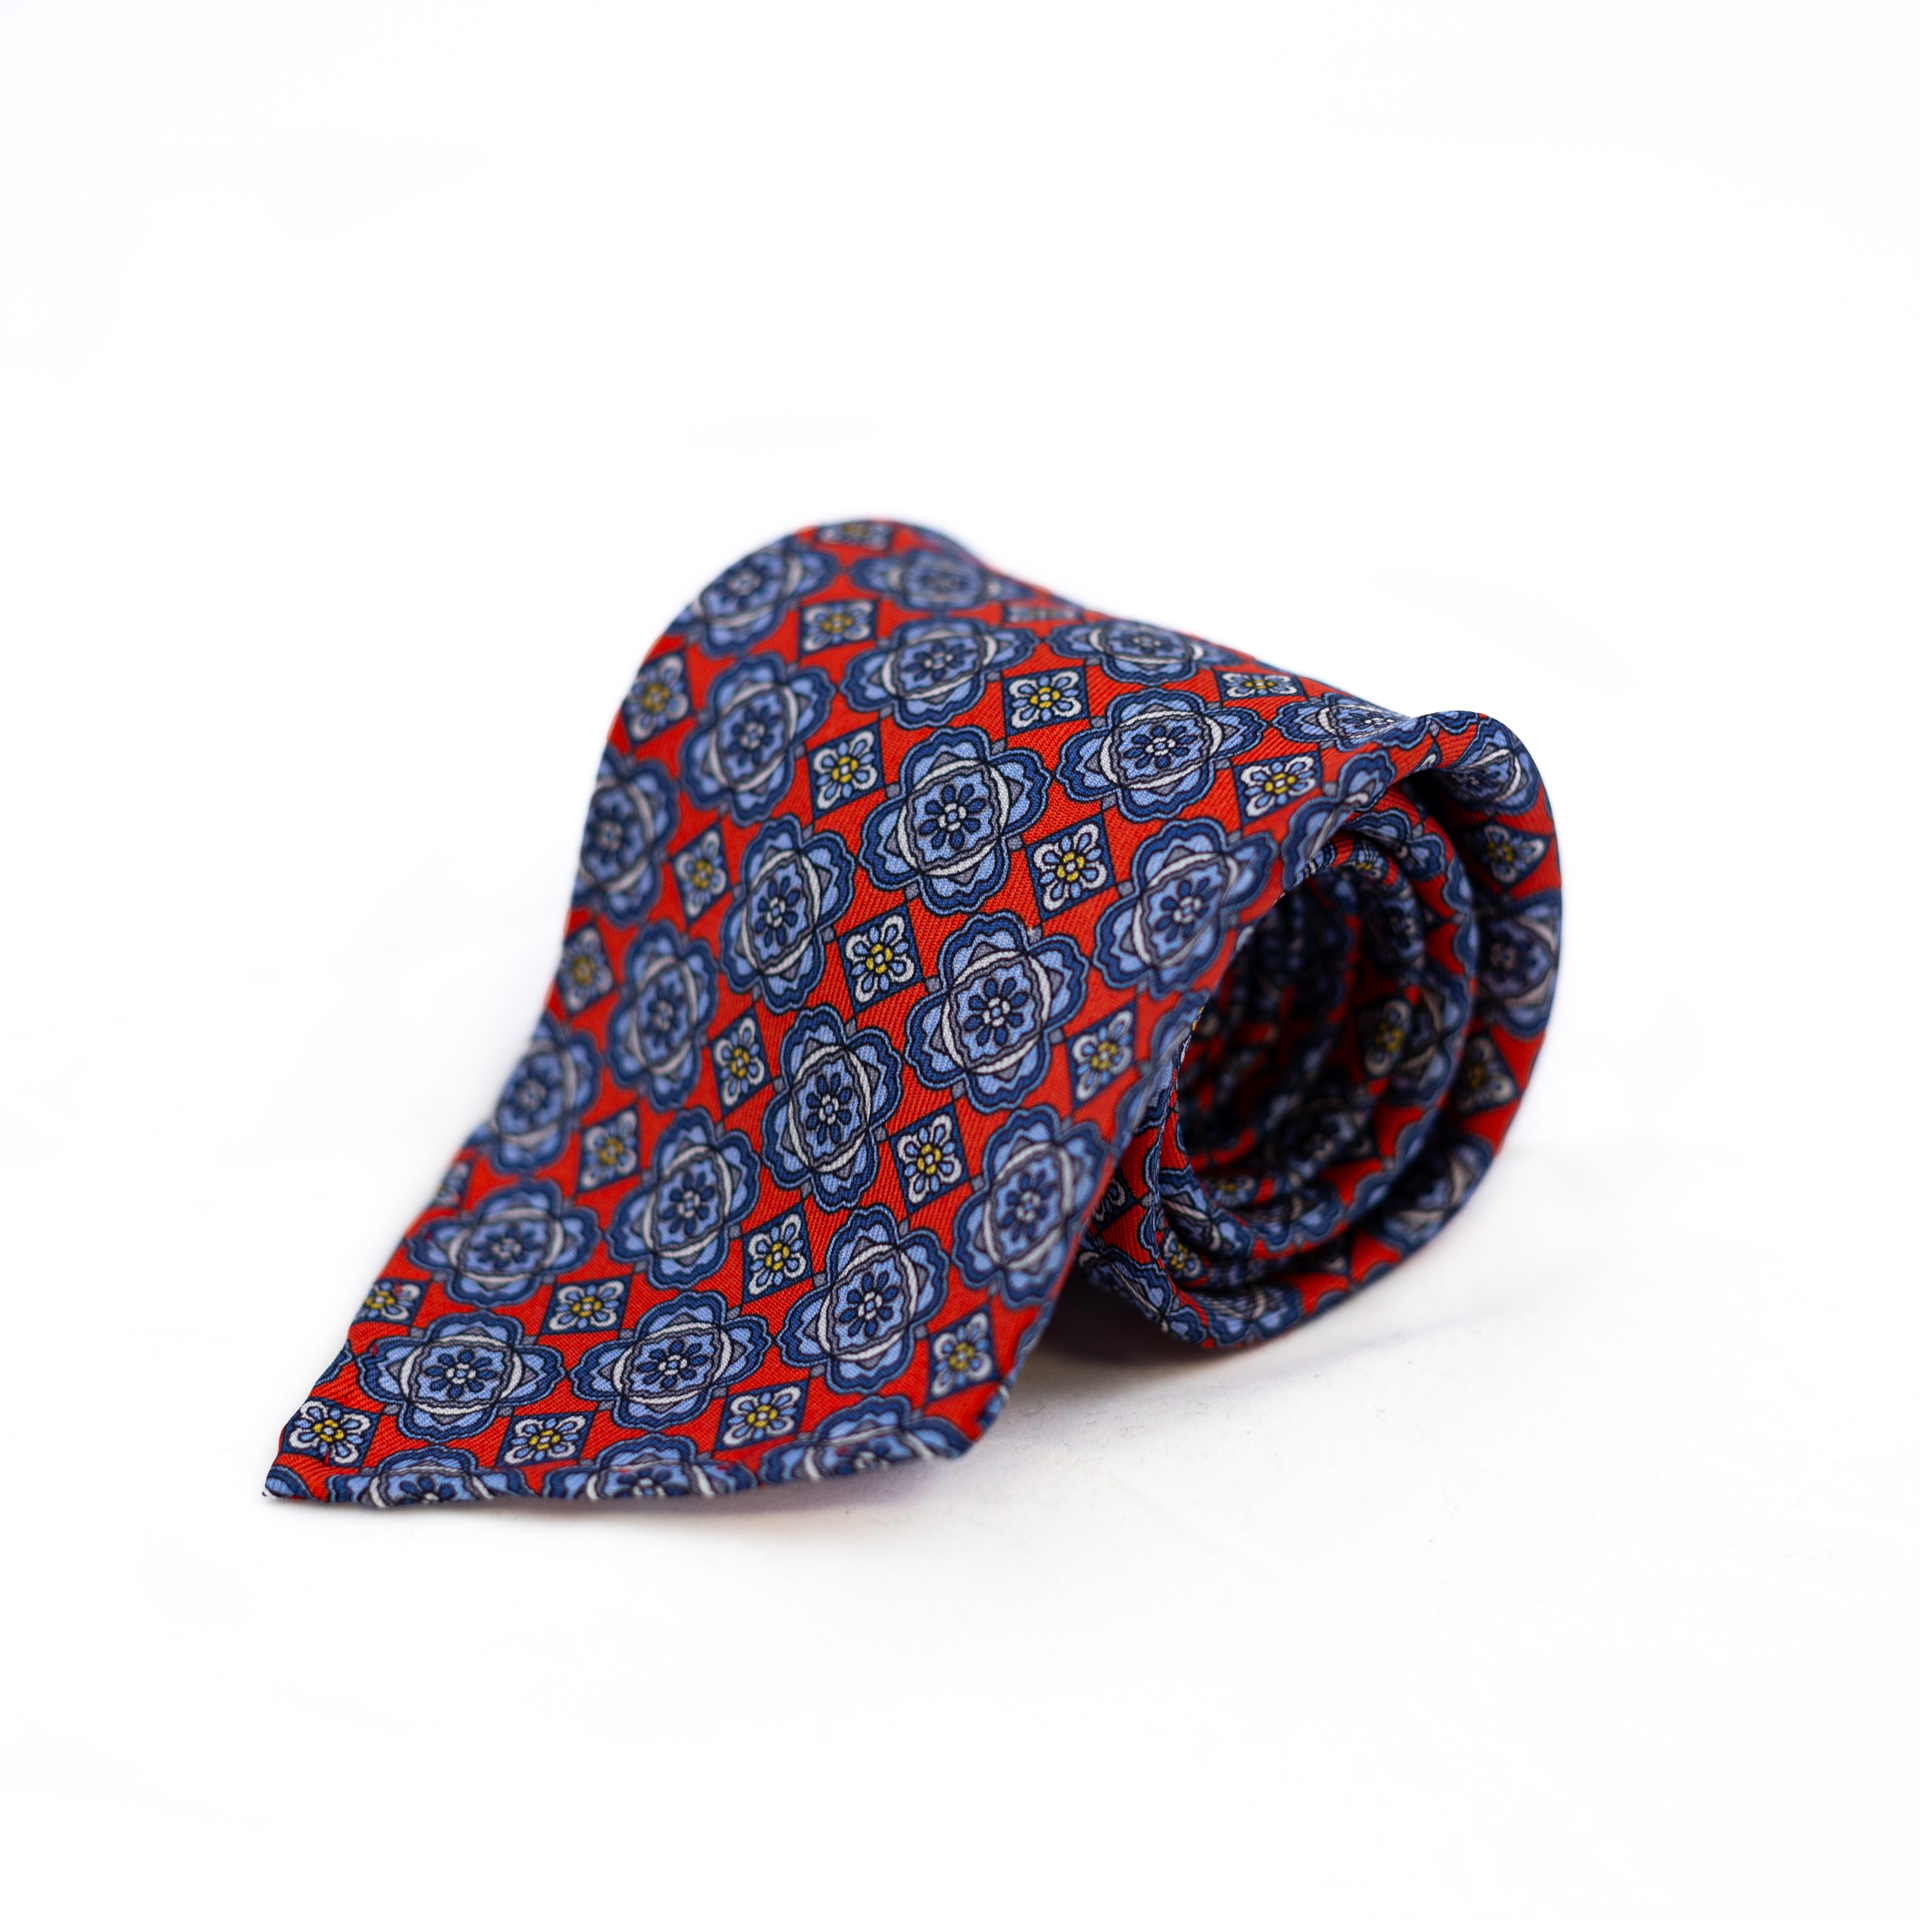 Red 5-fold printed silk tie folded